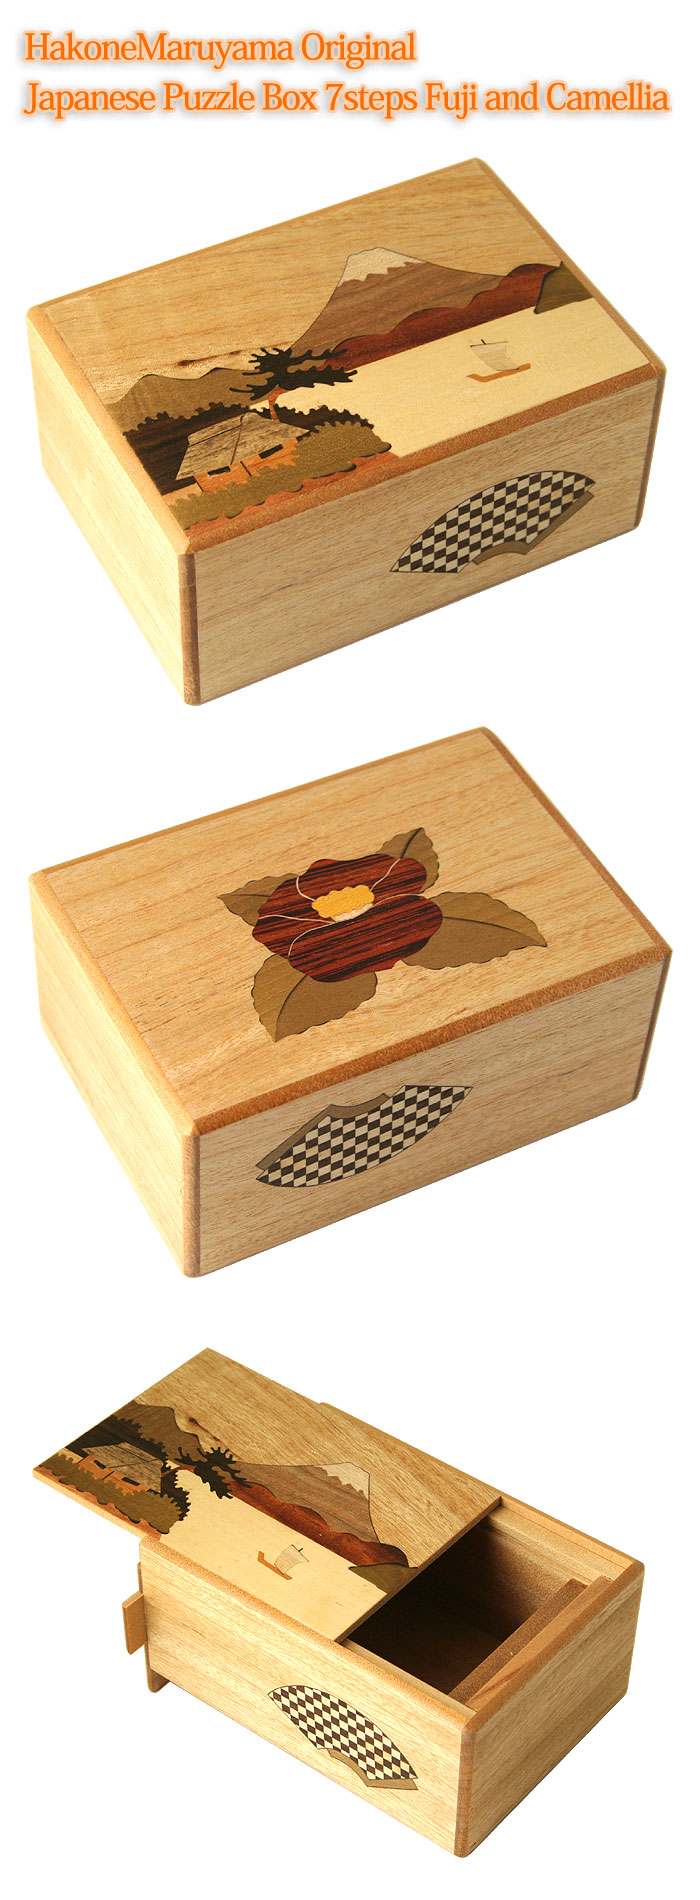 Japanese Puzzle Box 7steps Fuji and Camellia